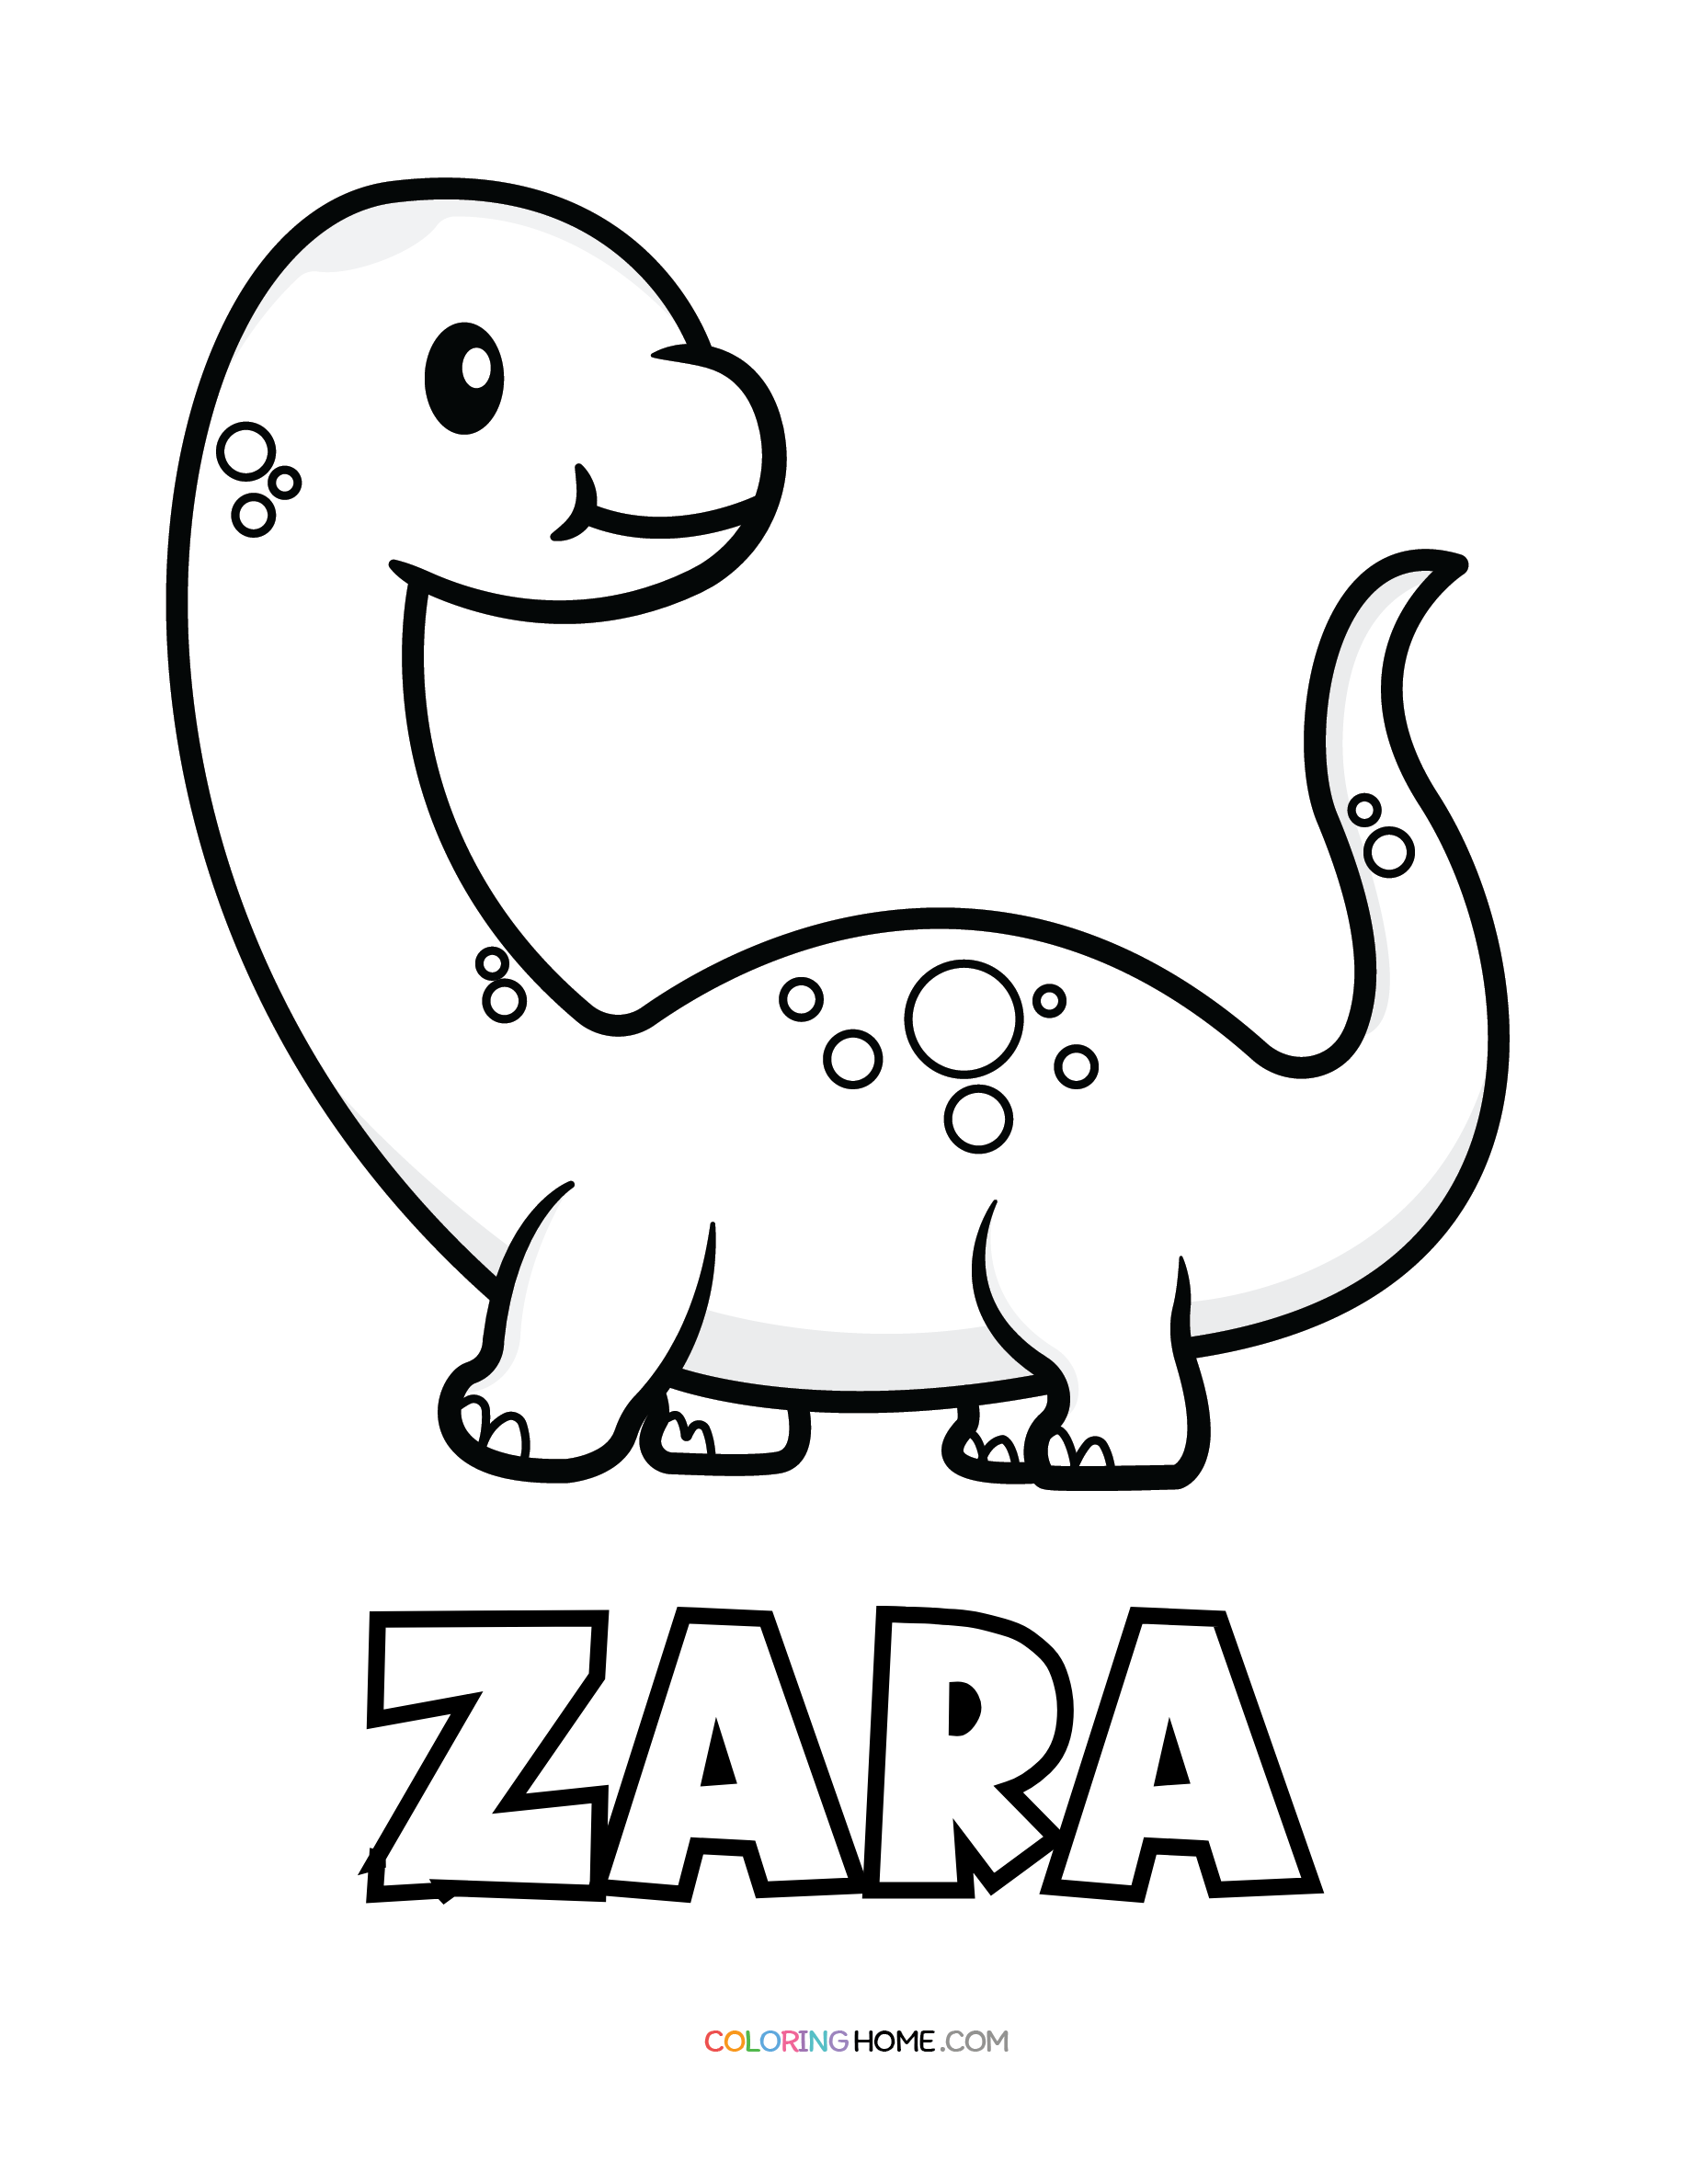 Zara dinosaur coloring page